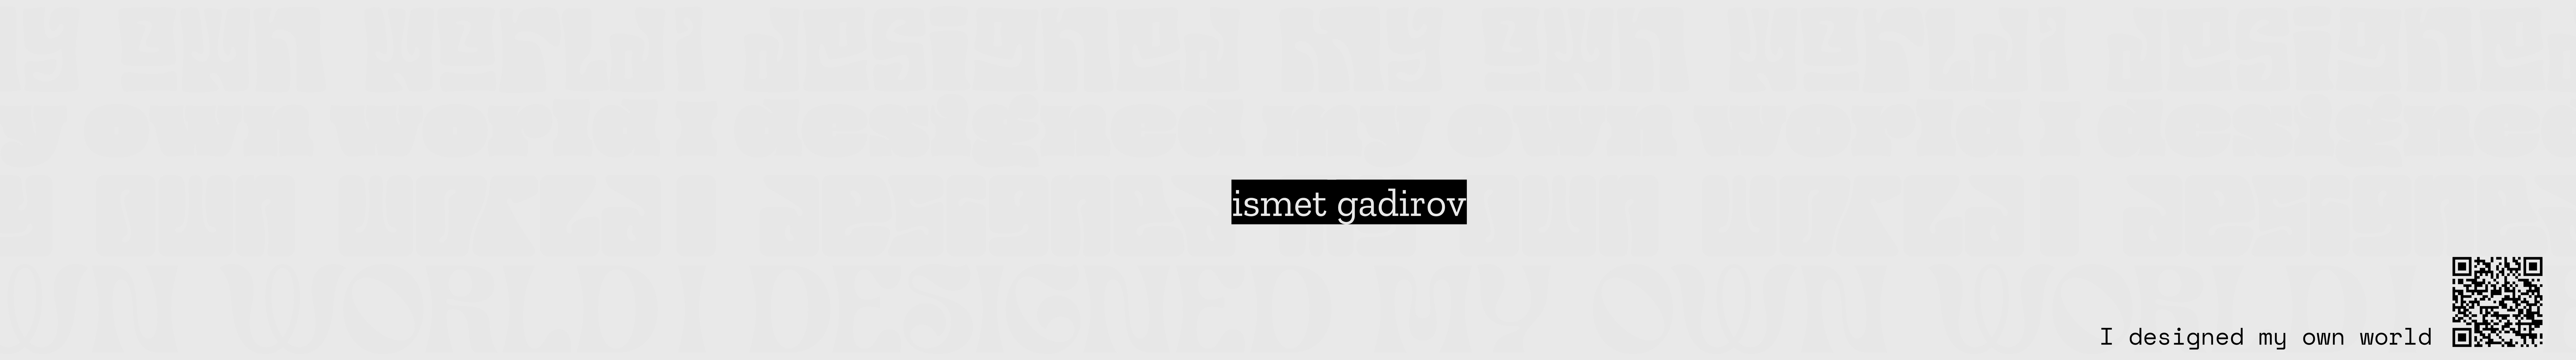 Ismet Gadirovs profilbanner